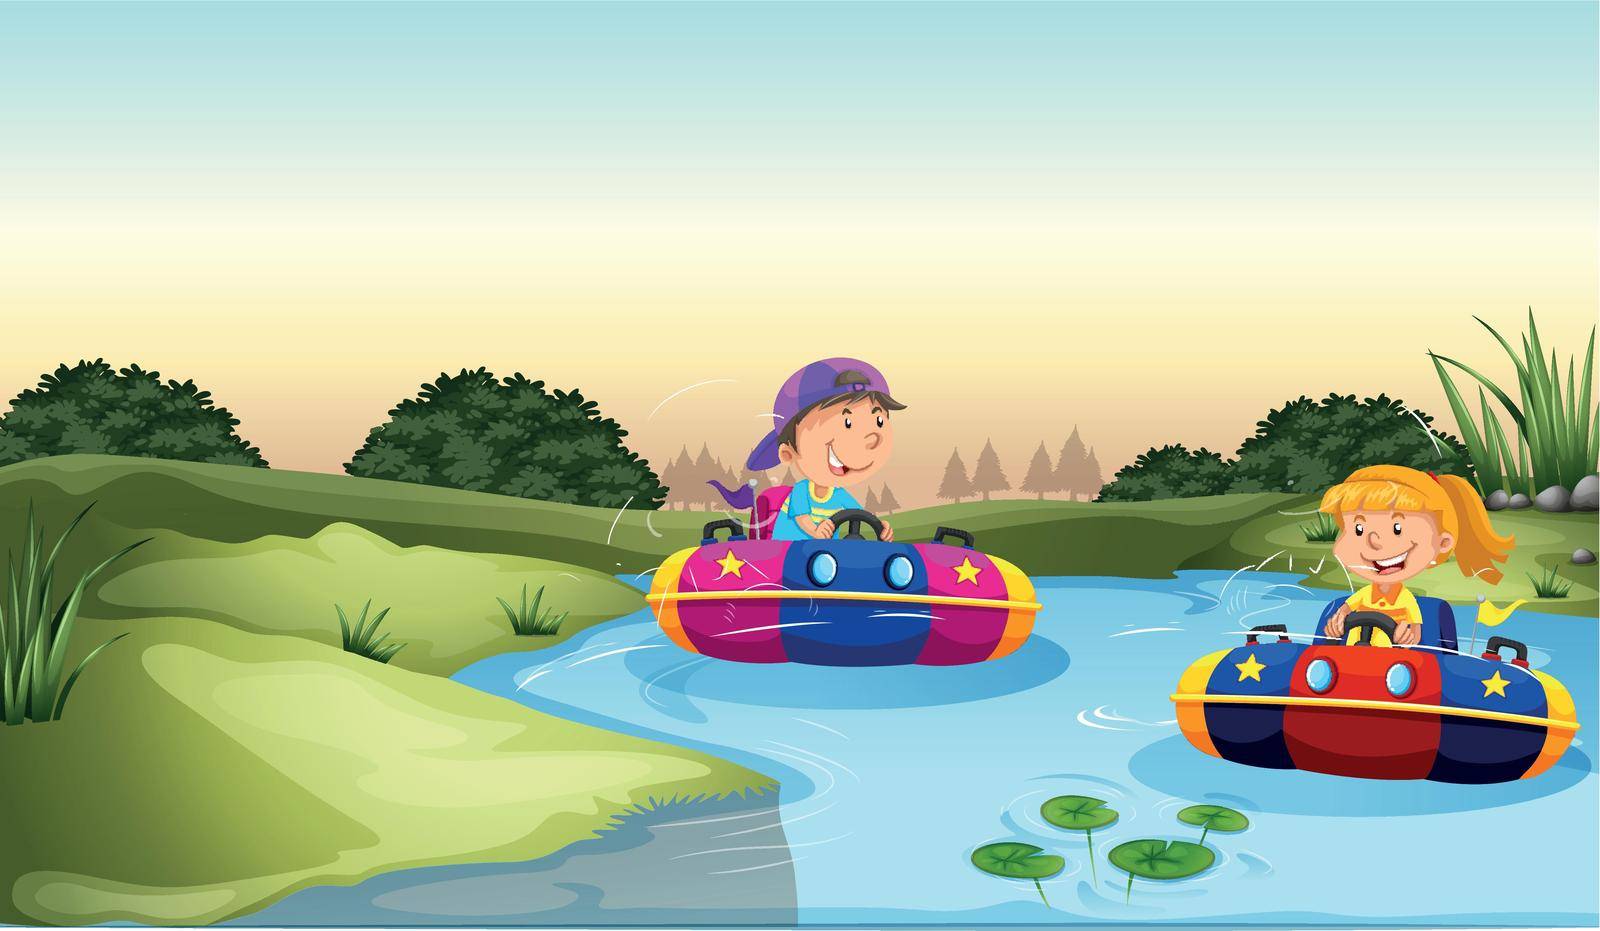 Children riding on rubber boats illustration